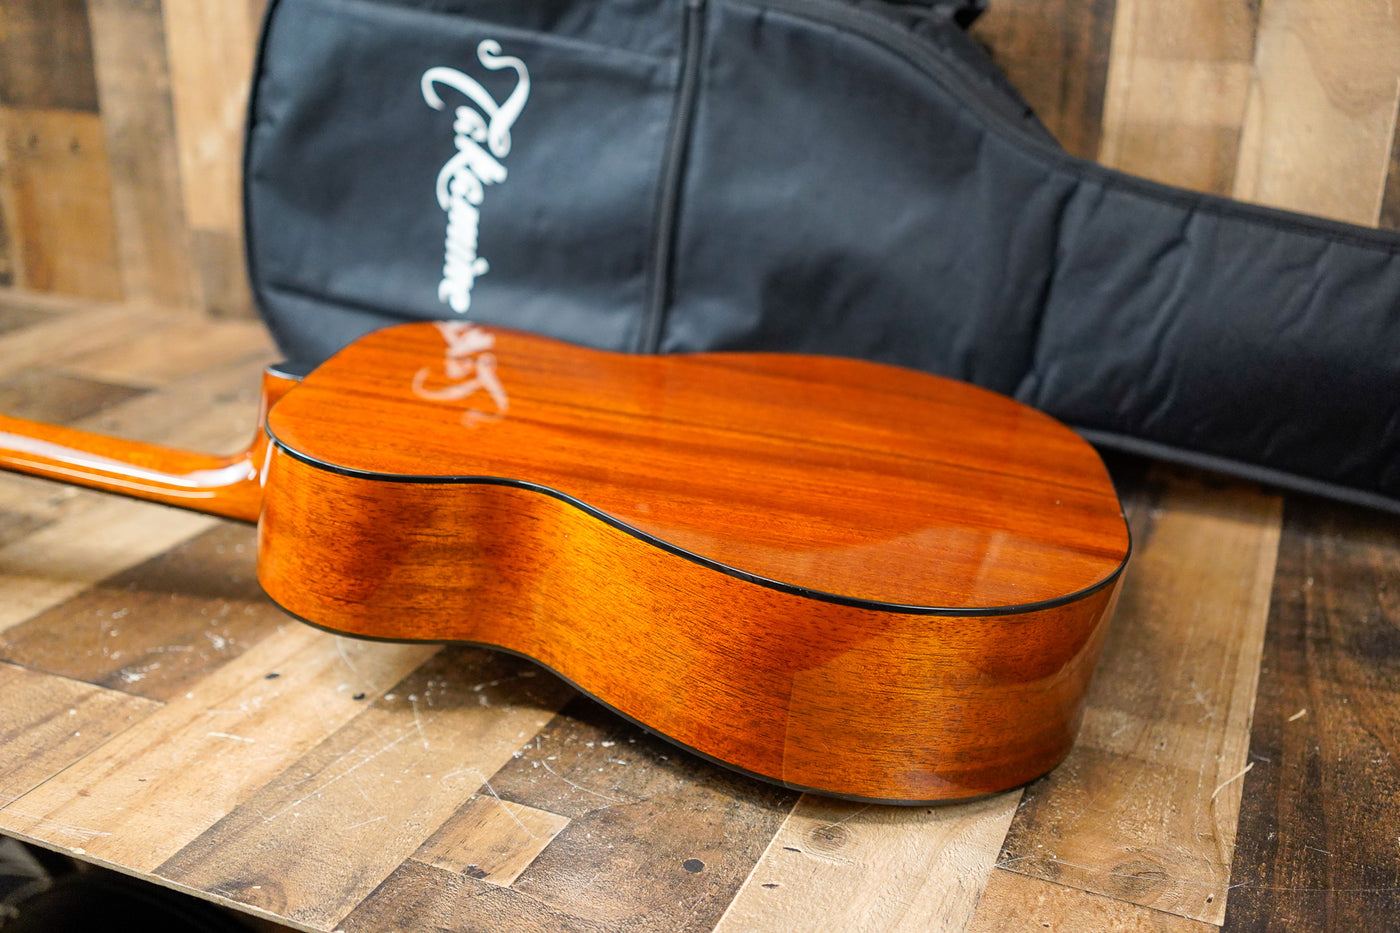 Blueridge BR-41 2015 Contemporary Series Baby Acoustic Guitar w/ Gig Bag